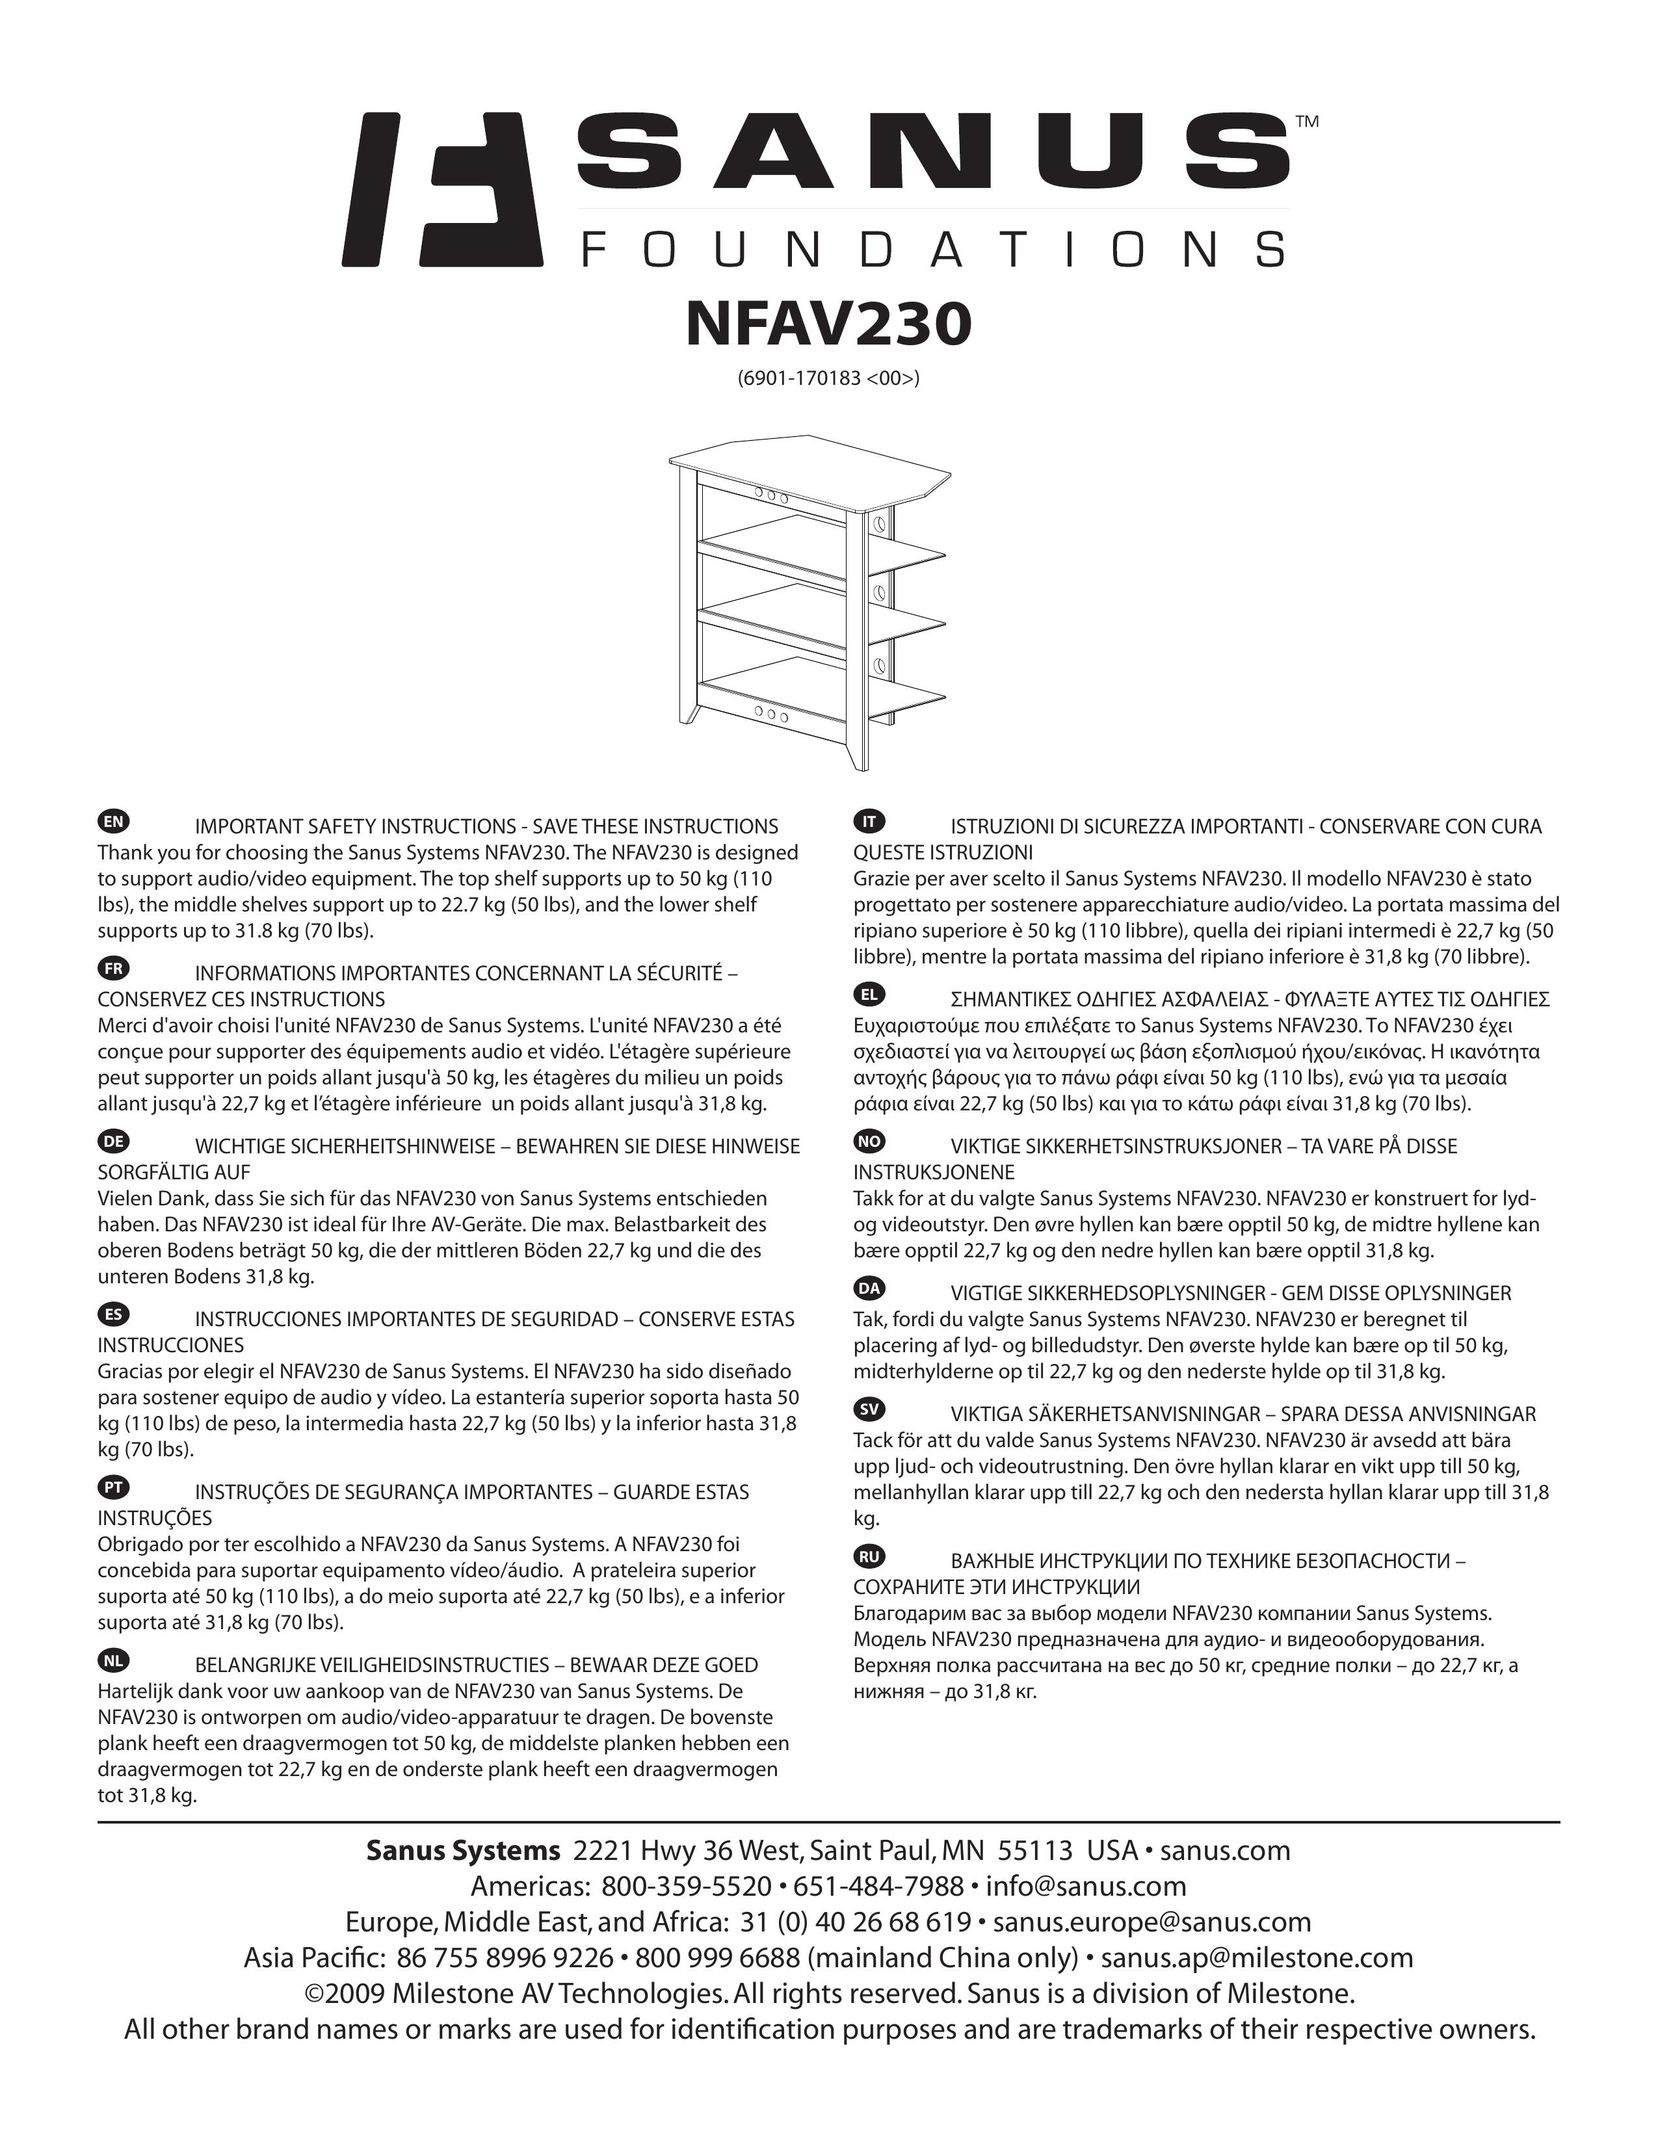 Sanus Systems NFAV230 Indoor Furnishings User Manual